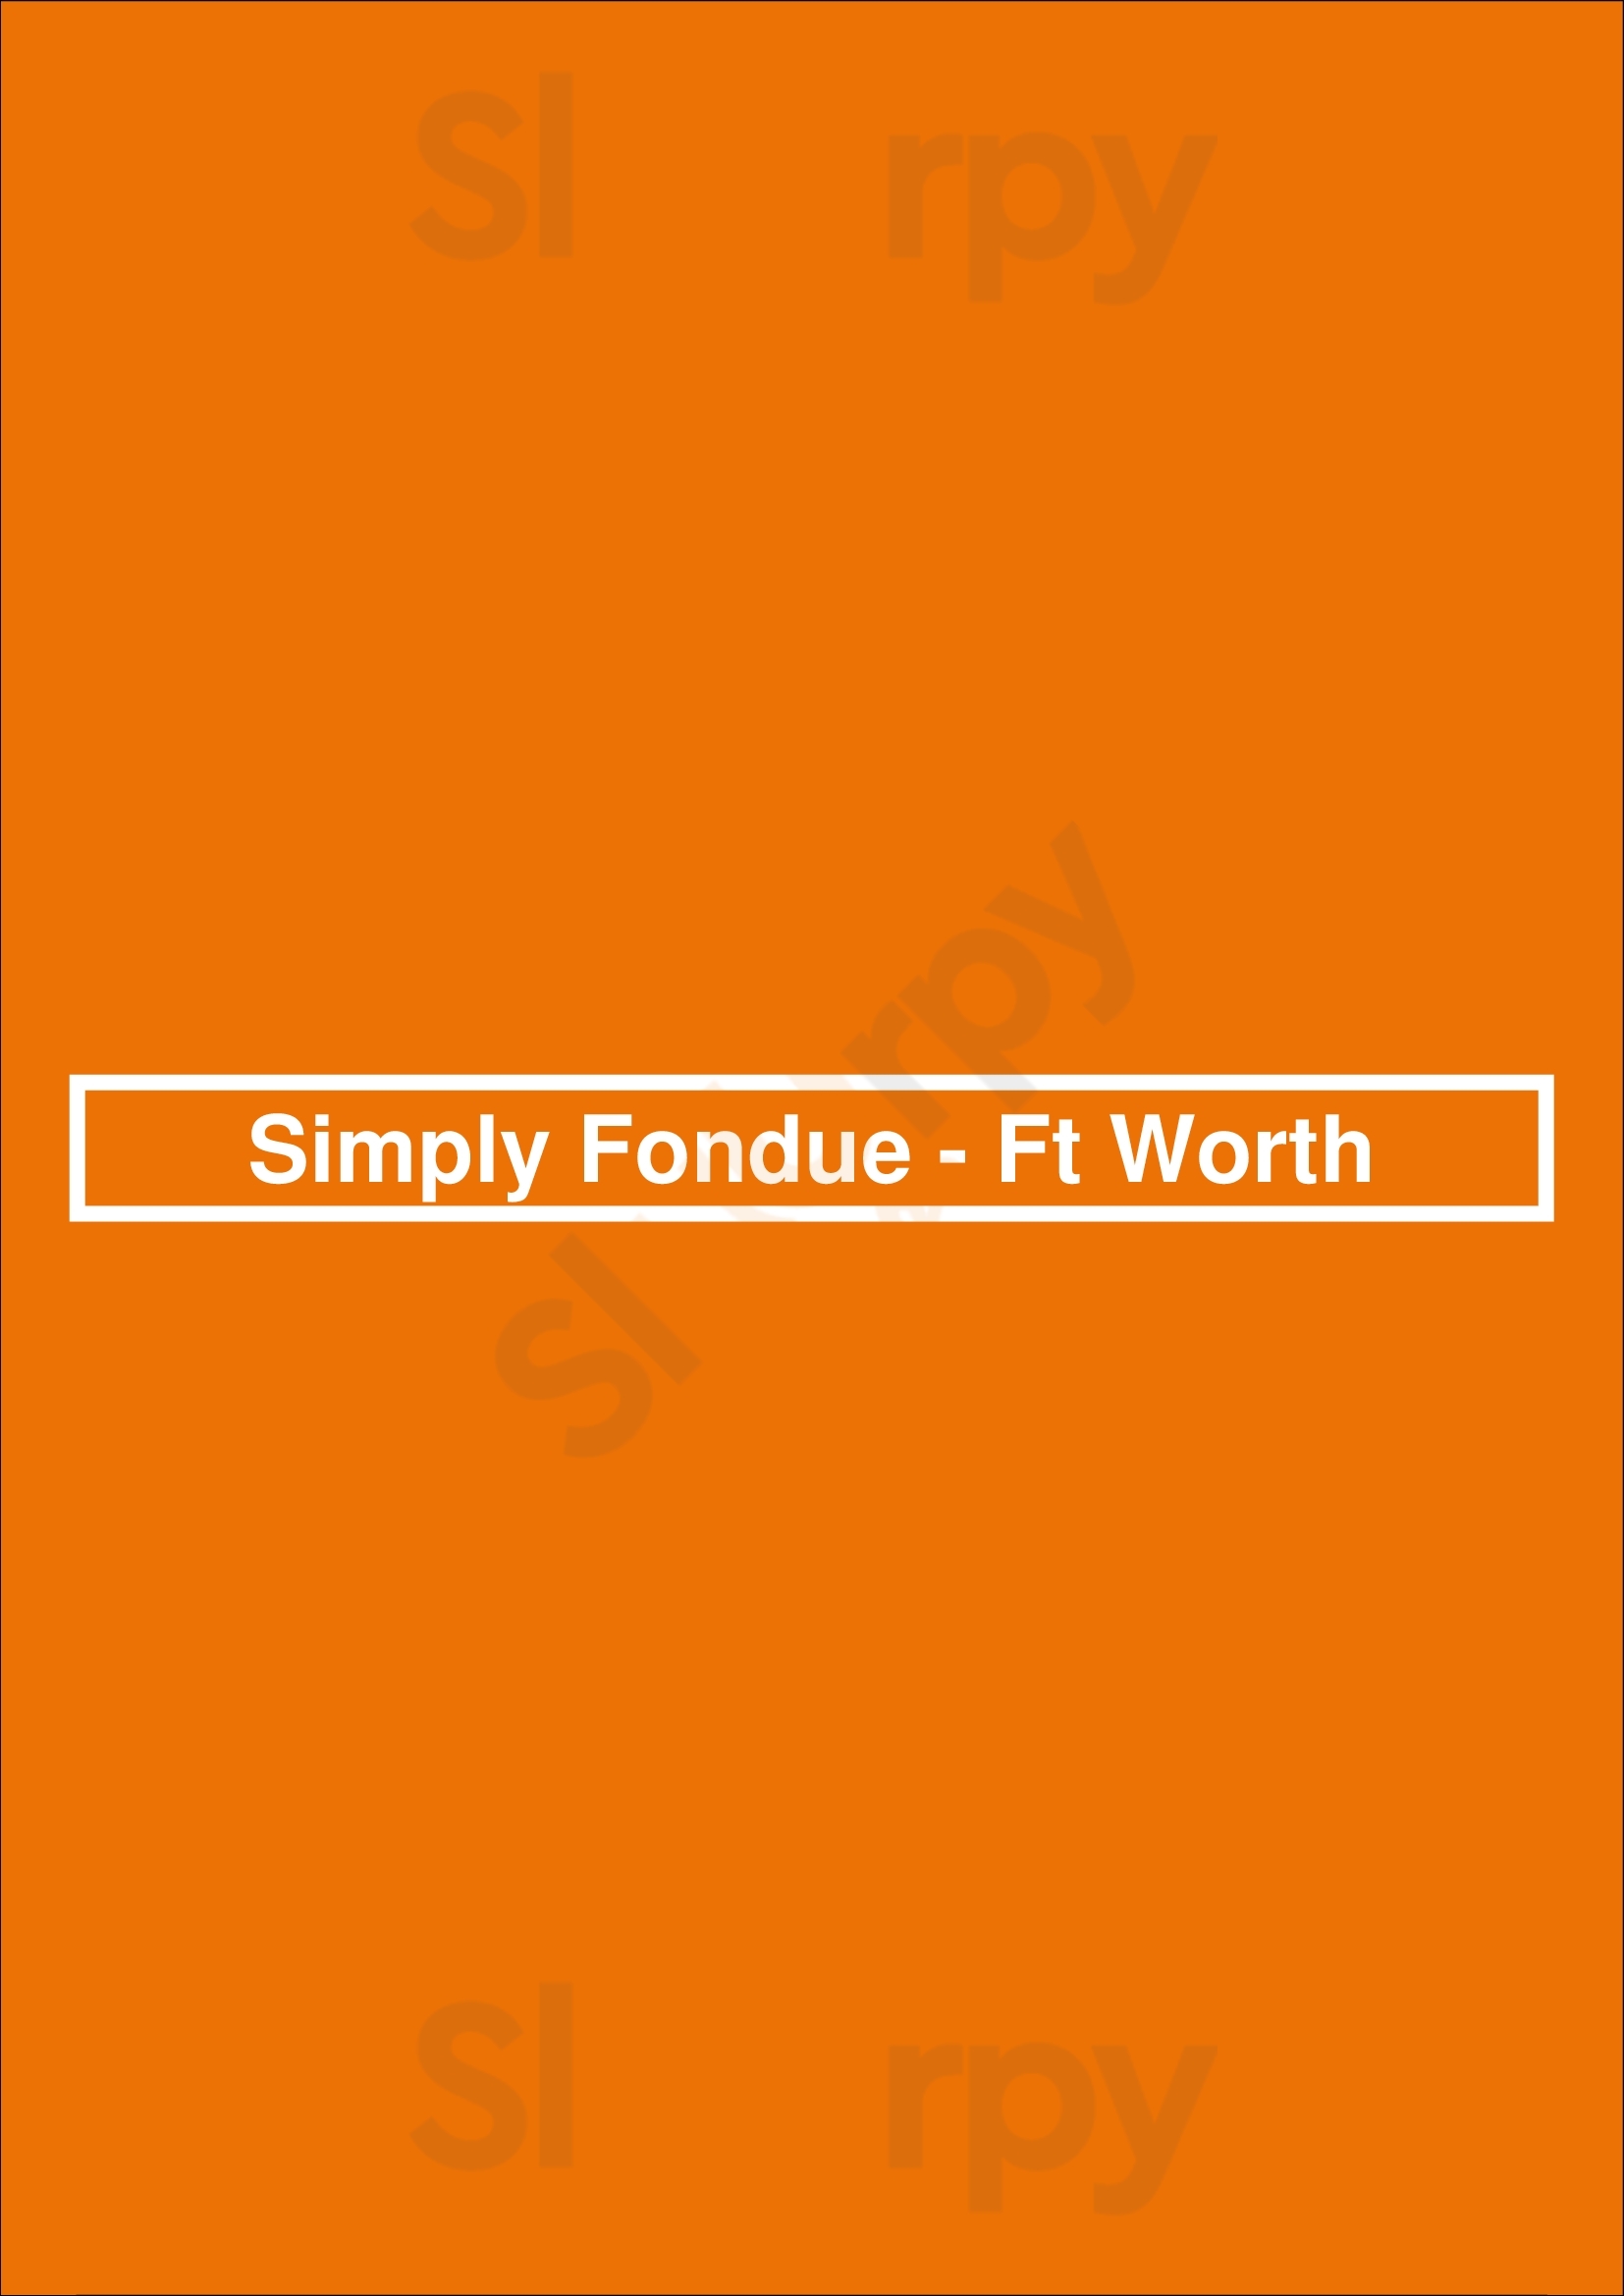 Simply Fondue - Ft Worth Fort Worth Menu - 1